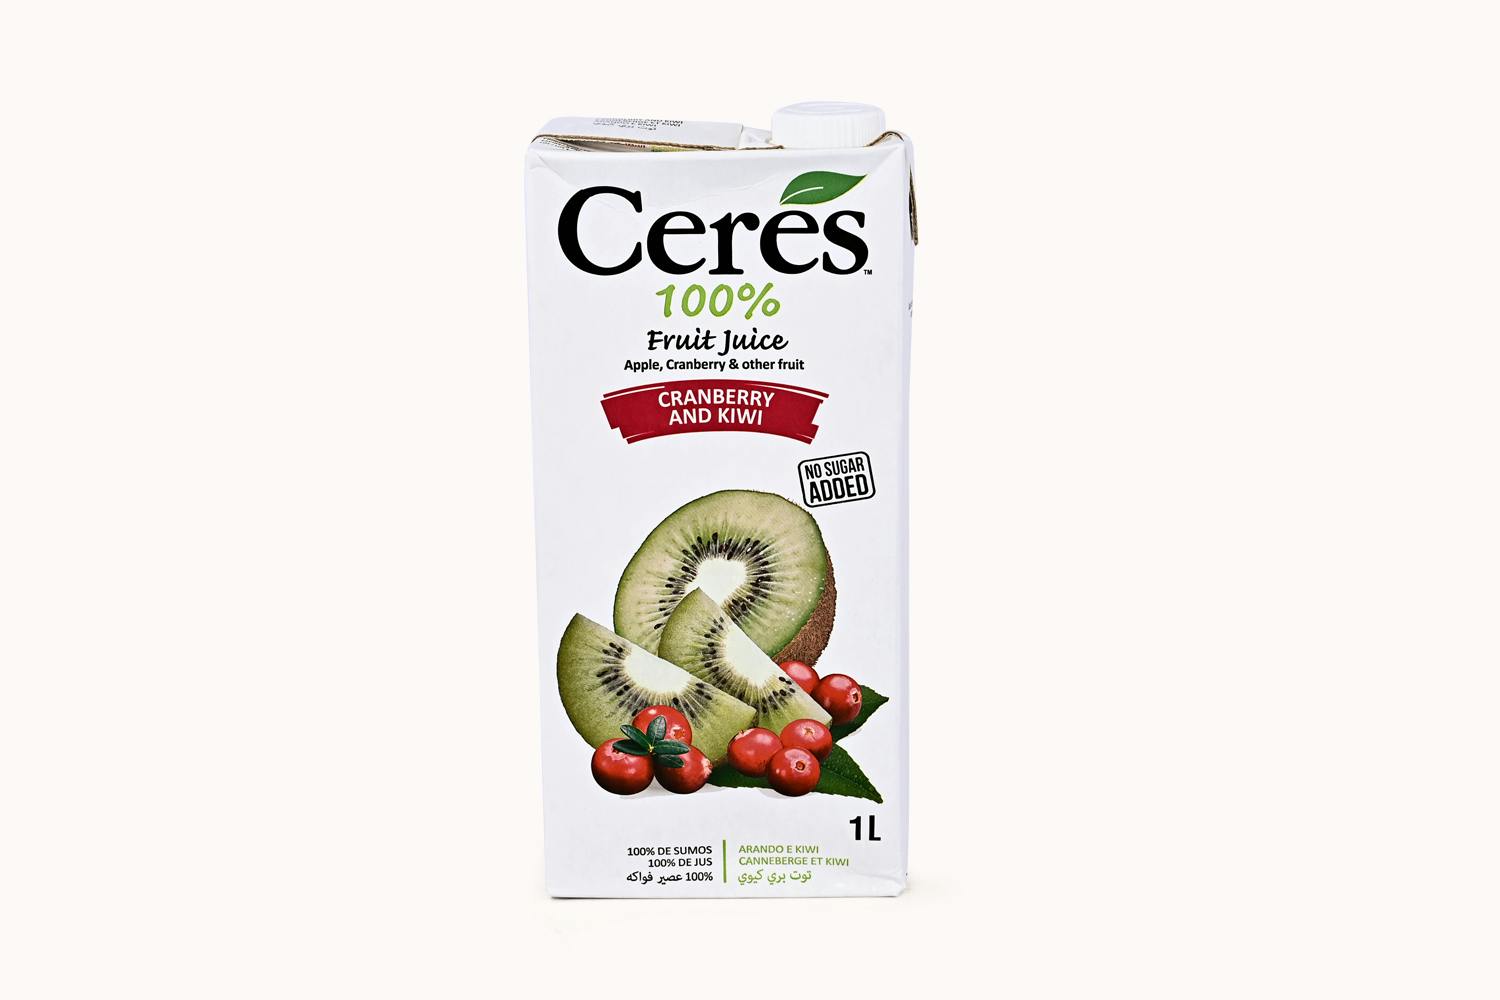 Ceres Cranberry Kiwi Fruit Juice